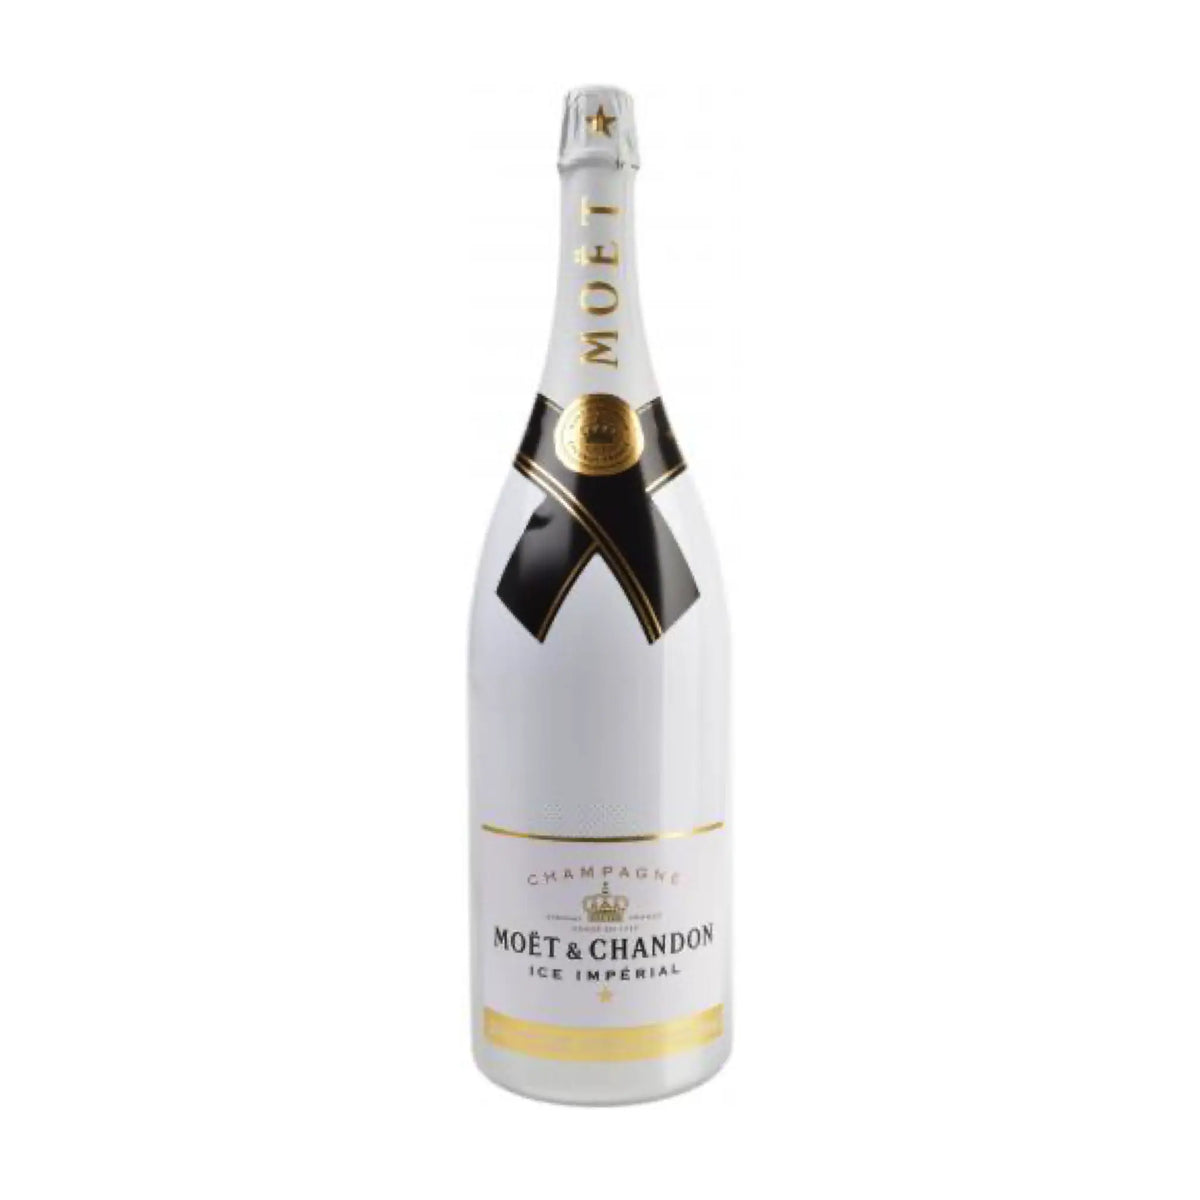 Moet et Chandon-Schaumwein-Pinot Noir, Pinot Meunier, Chardonnay-ICE Imperial Champagne AOC 3,0L DMG-WINECOM